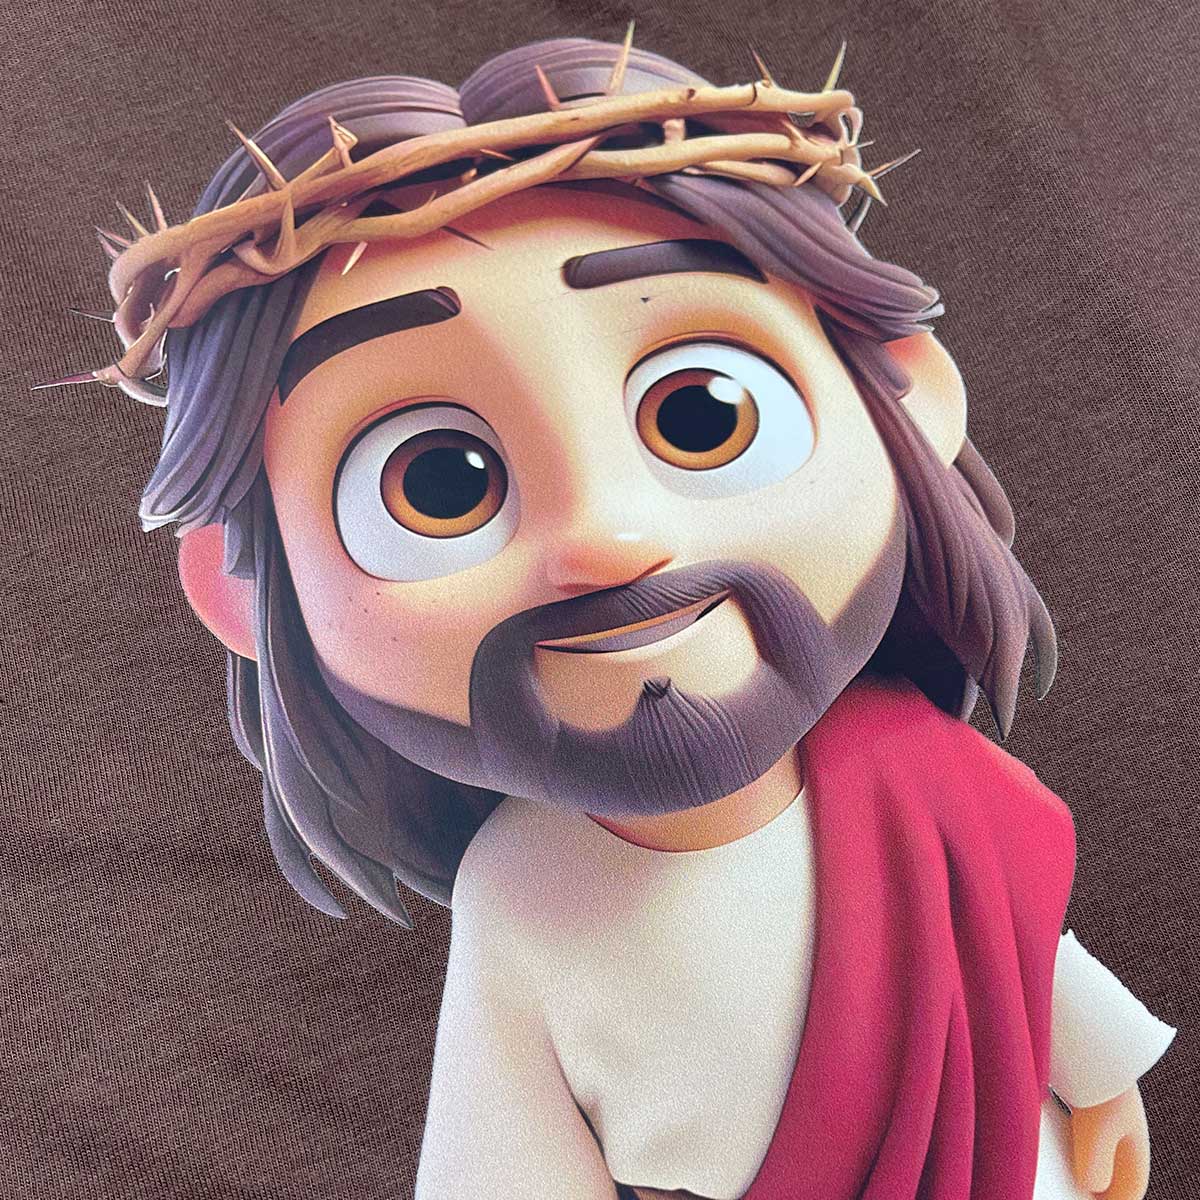 T-Shirt Infantil Marrom Jesus Desenho